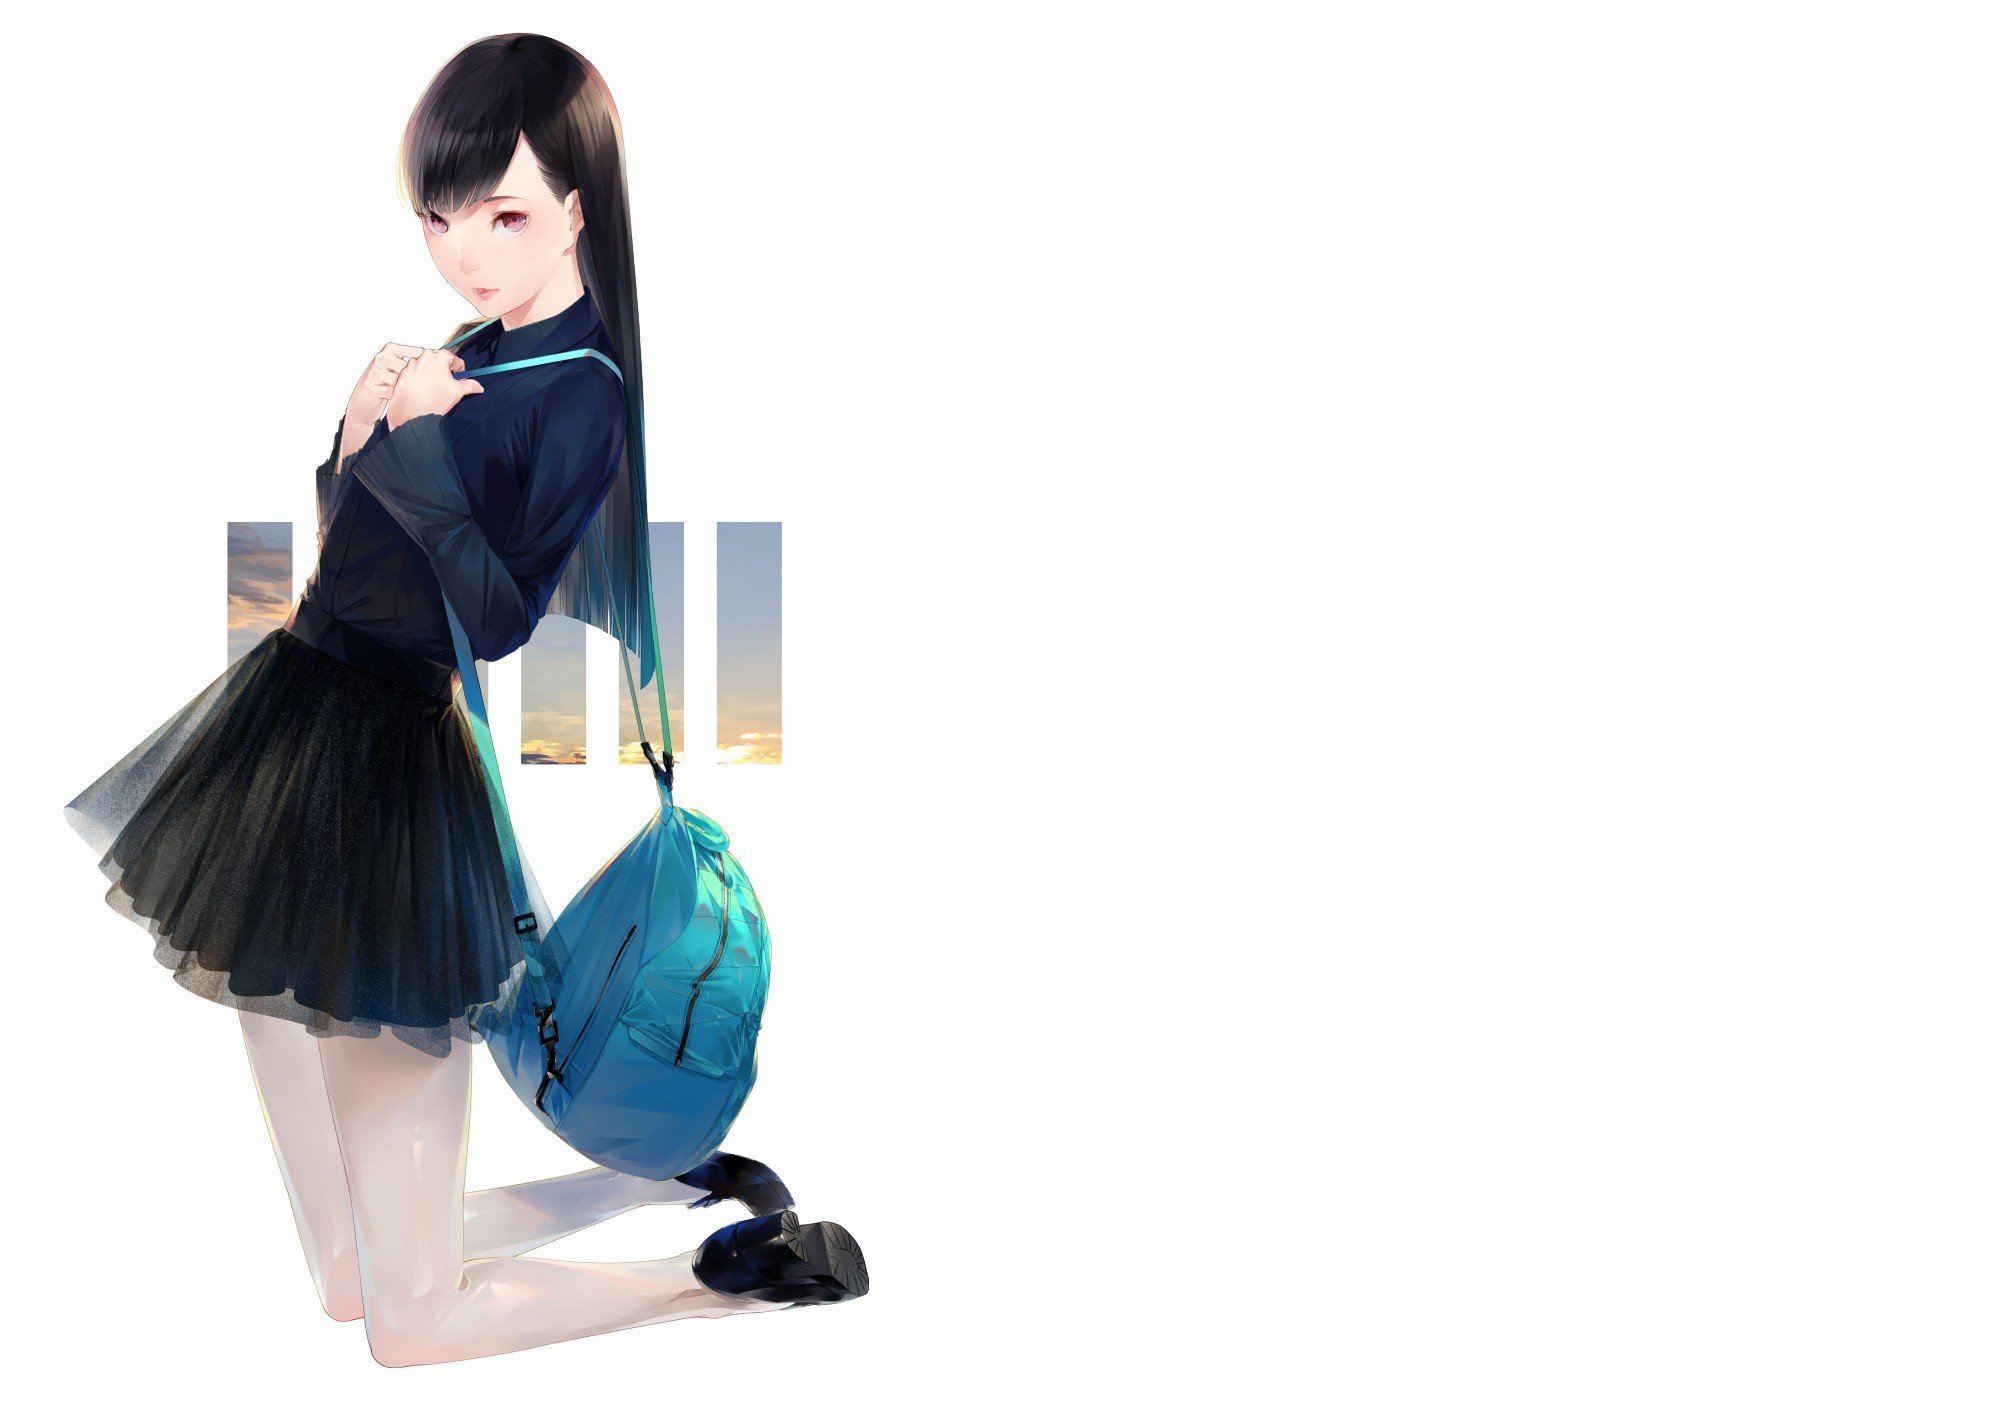 Sawasawa, Backpacks, Skirt, Anime girls Wallpaper